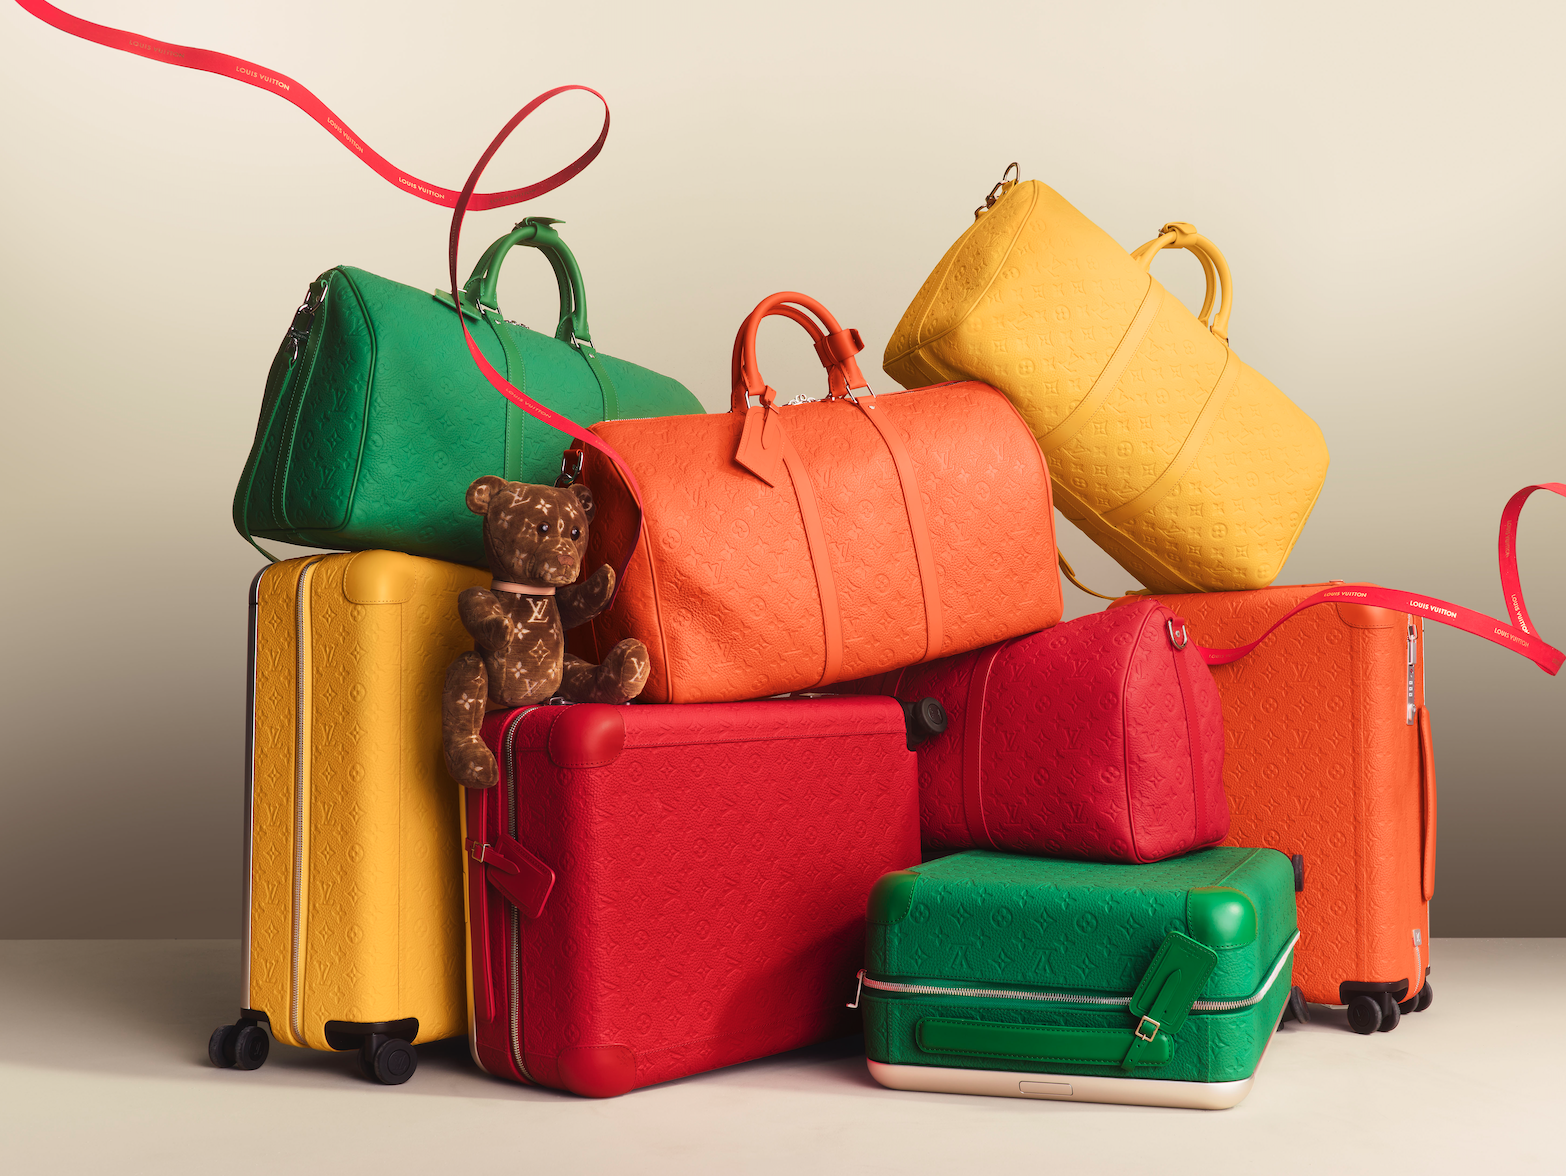 Bolsa de viaje piel mujer hombre maleta viaje bolsa equipaje cuero italiano  bolsa de viaje bolso deportivo bolsa cabina amarillo bolso mano -   México